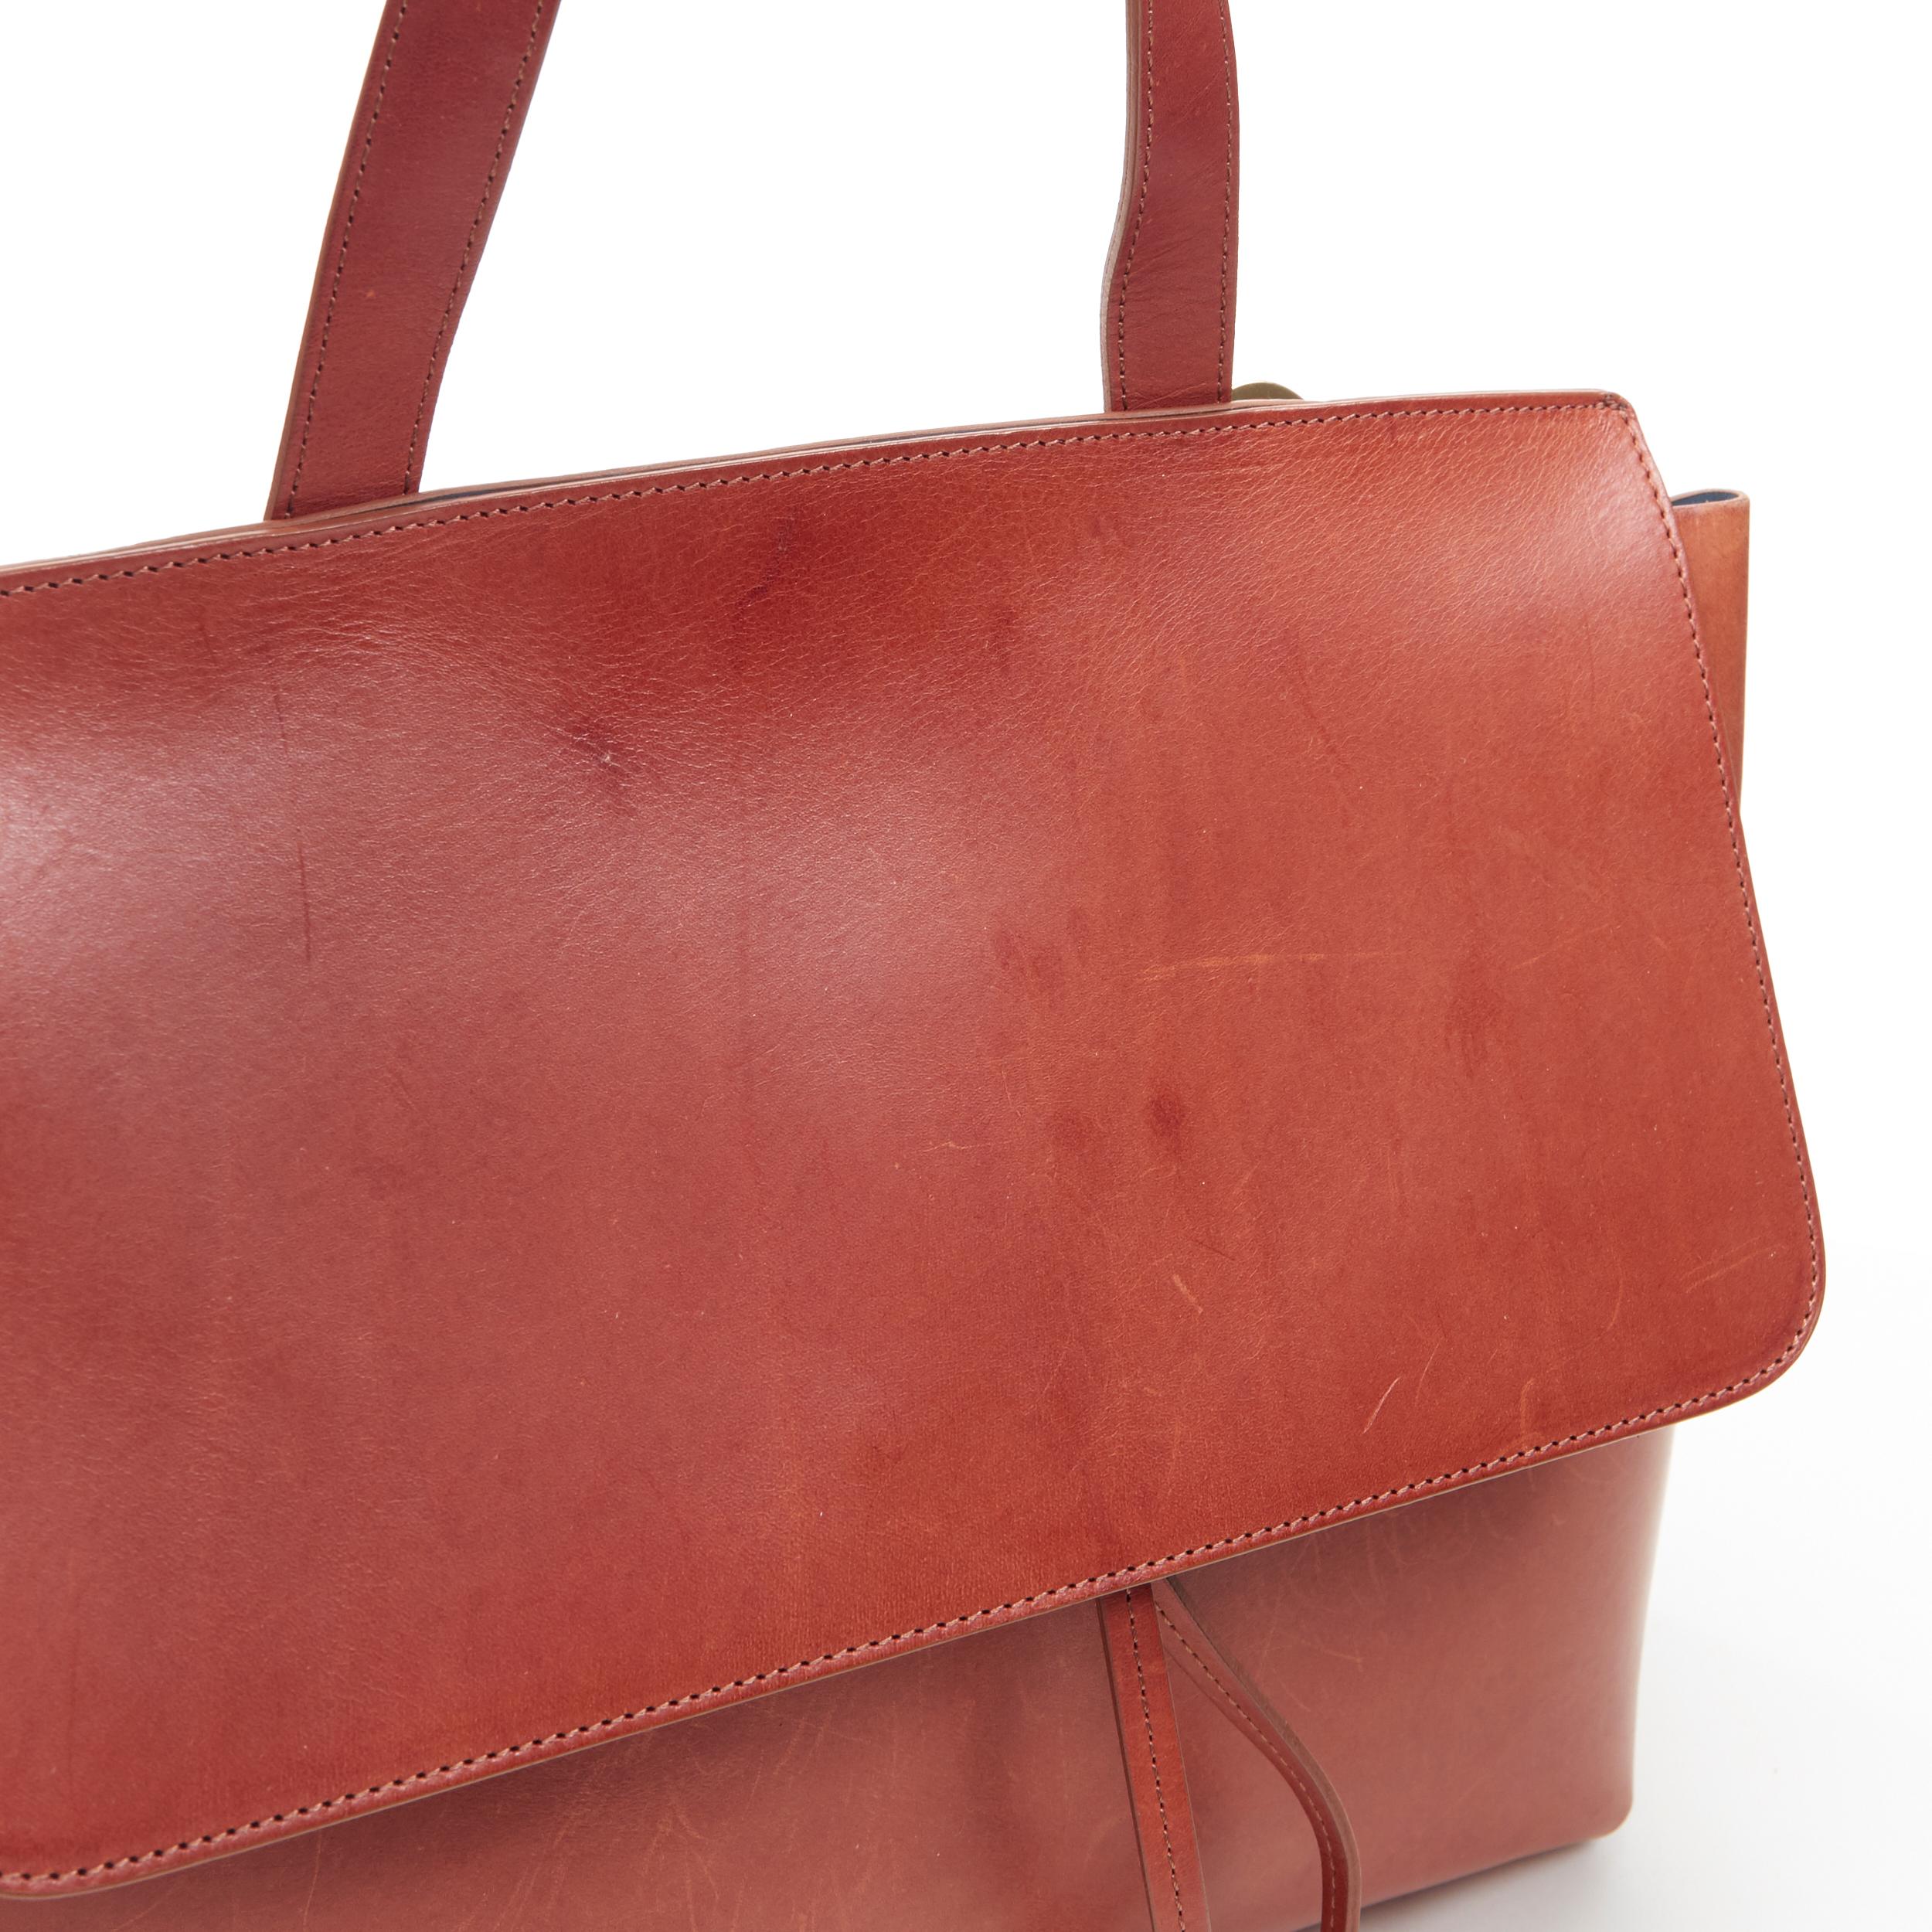 Women's MANSUR GAVRIEL Lady cognac brown smooth leather flap shoulder satchel bag